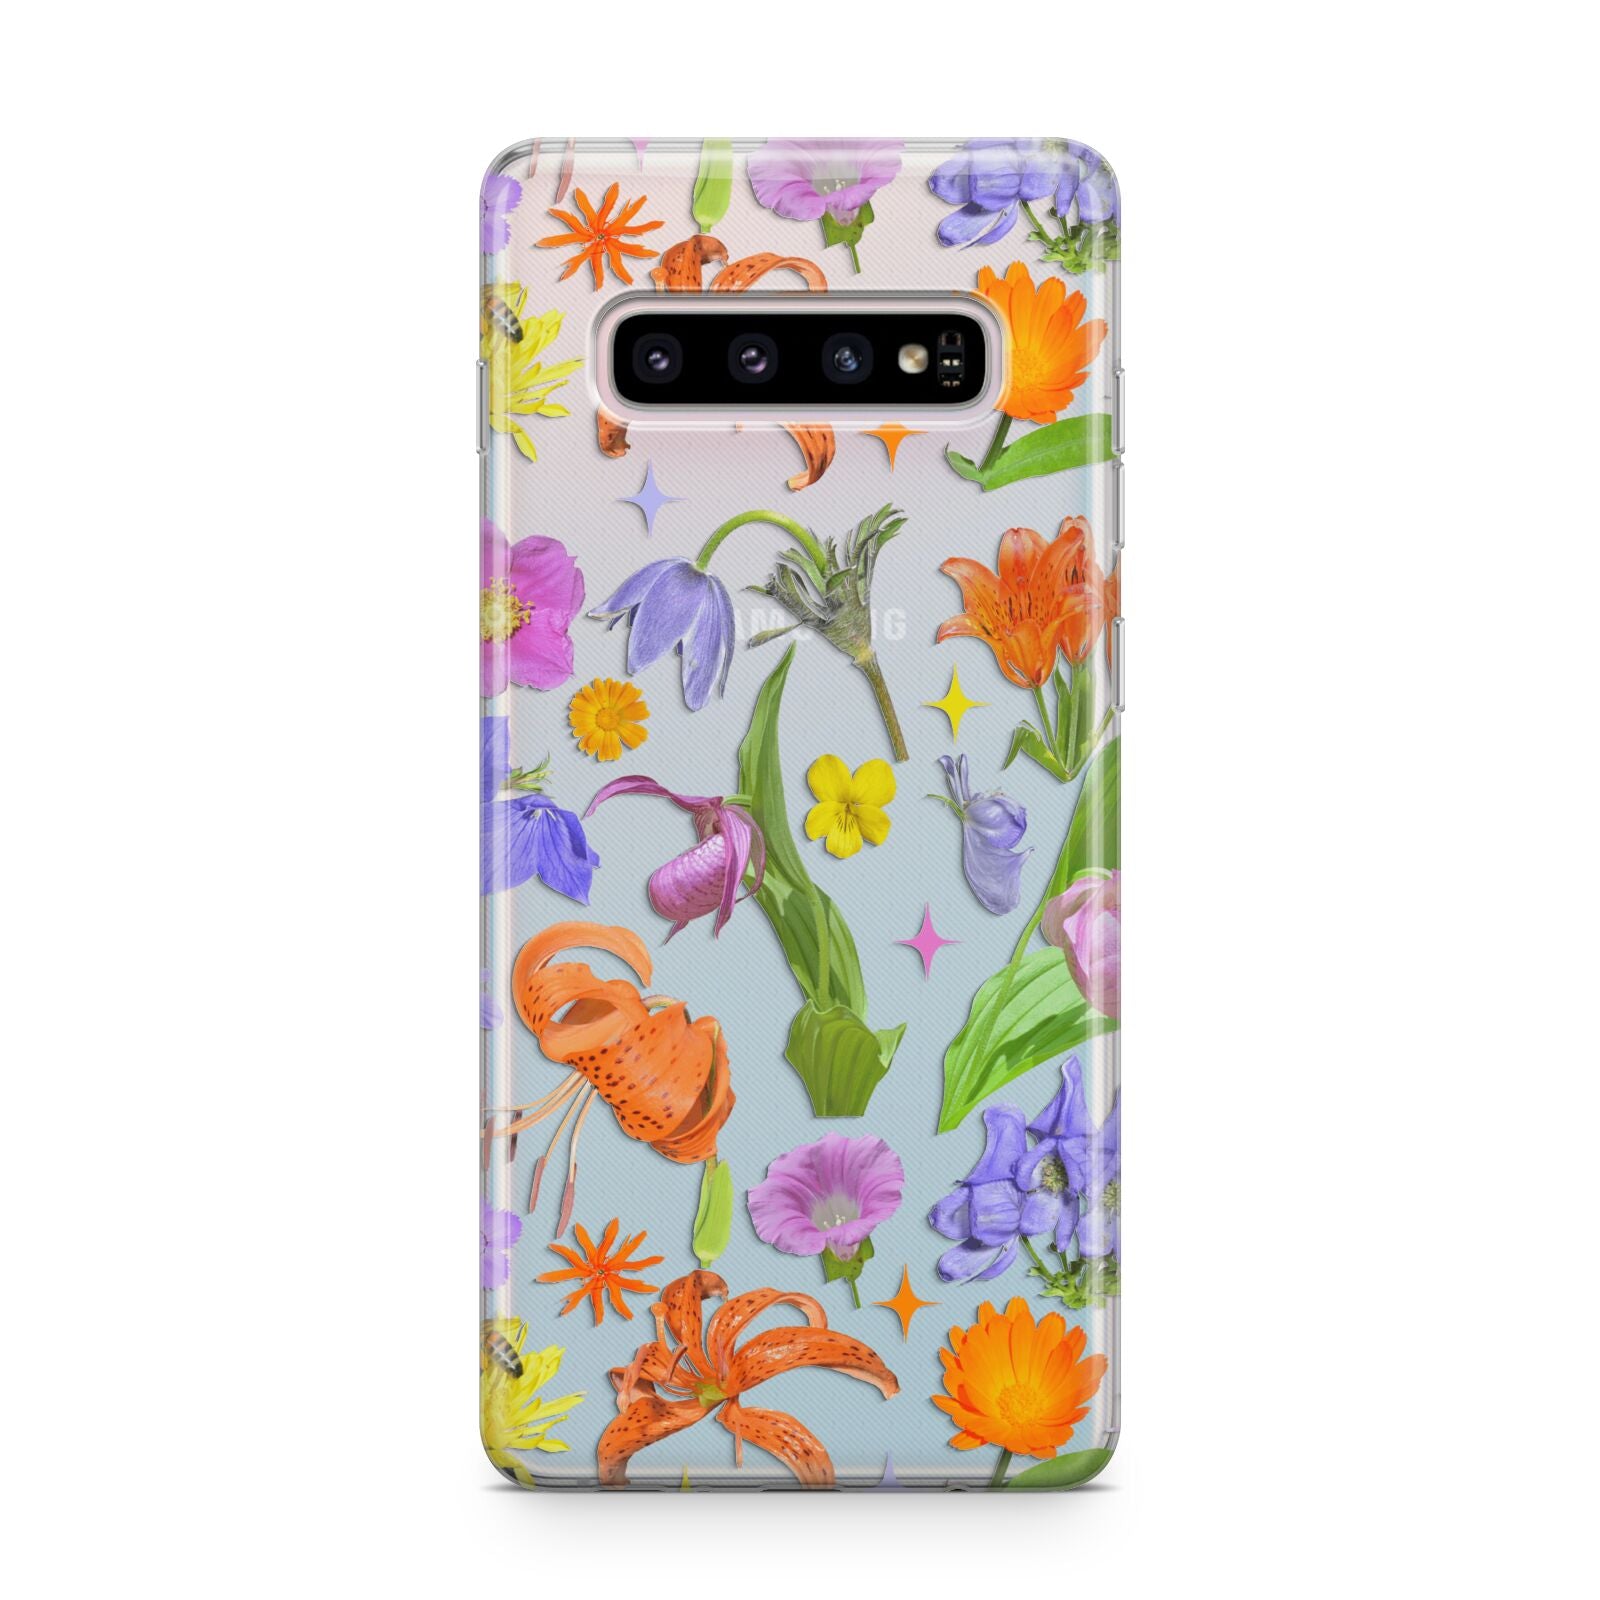 Floral Mix Samsung Galaxy S10 Plus Case